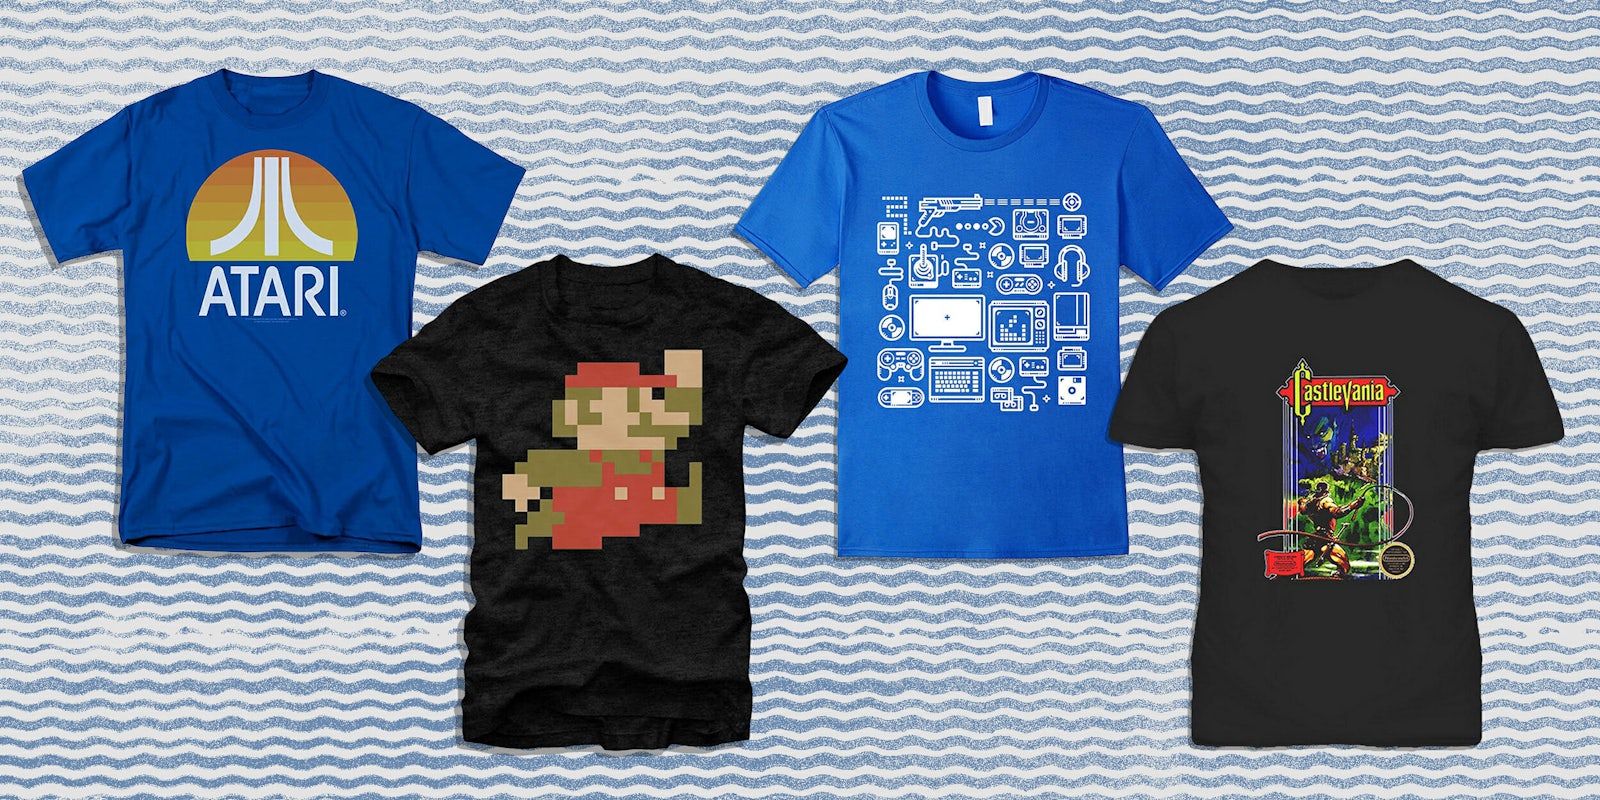 Atari, Super Mario Bros., and Castlevania t-shirts